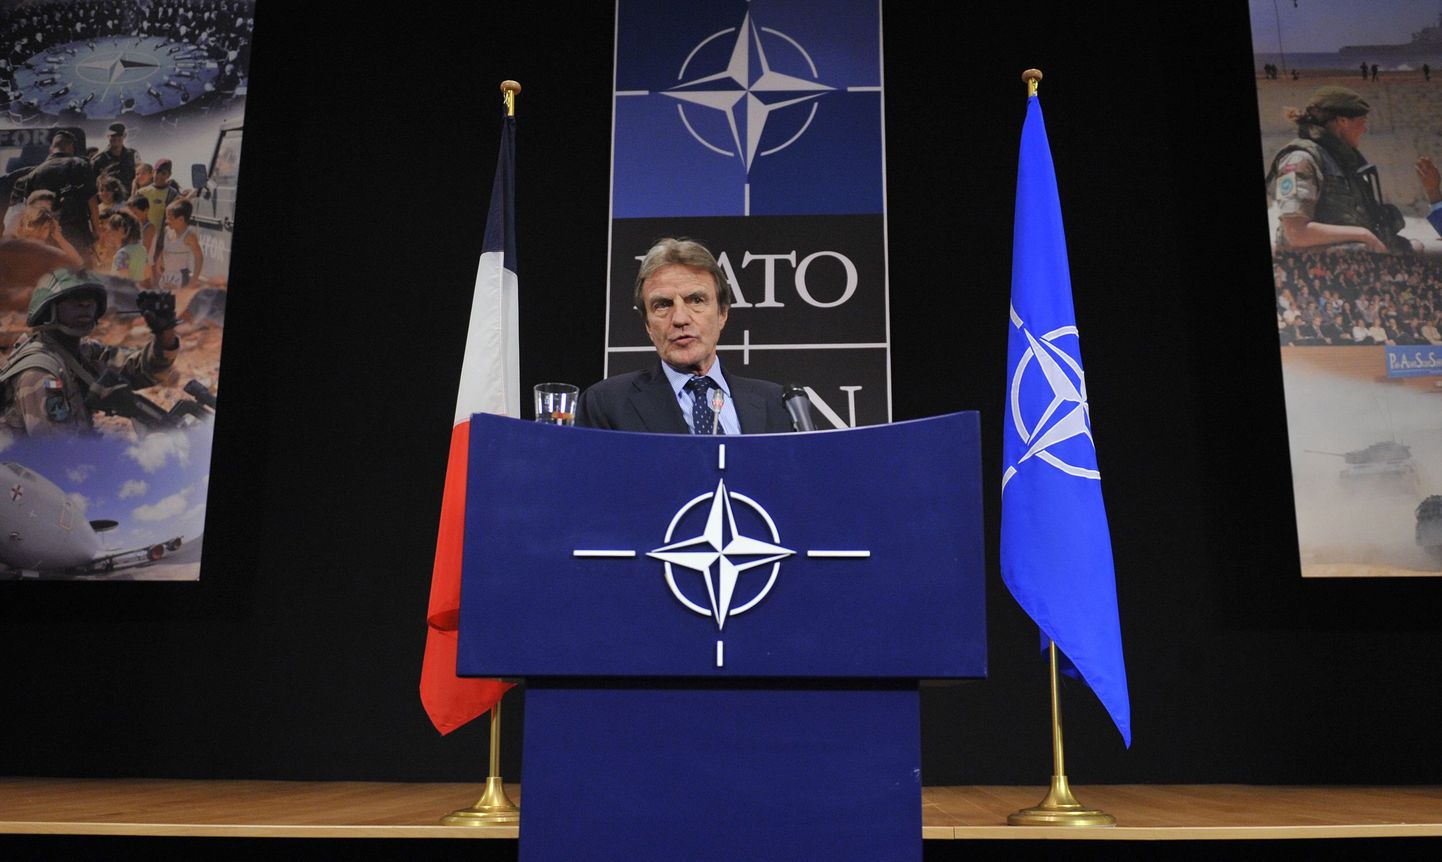 Prantsuse välisminister Bernard Kouchner kõnelemas pressikonverentsil NATO peakorteris.